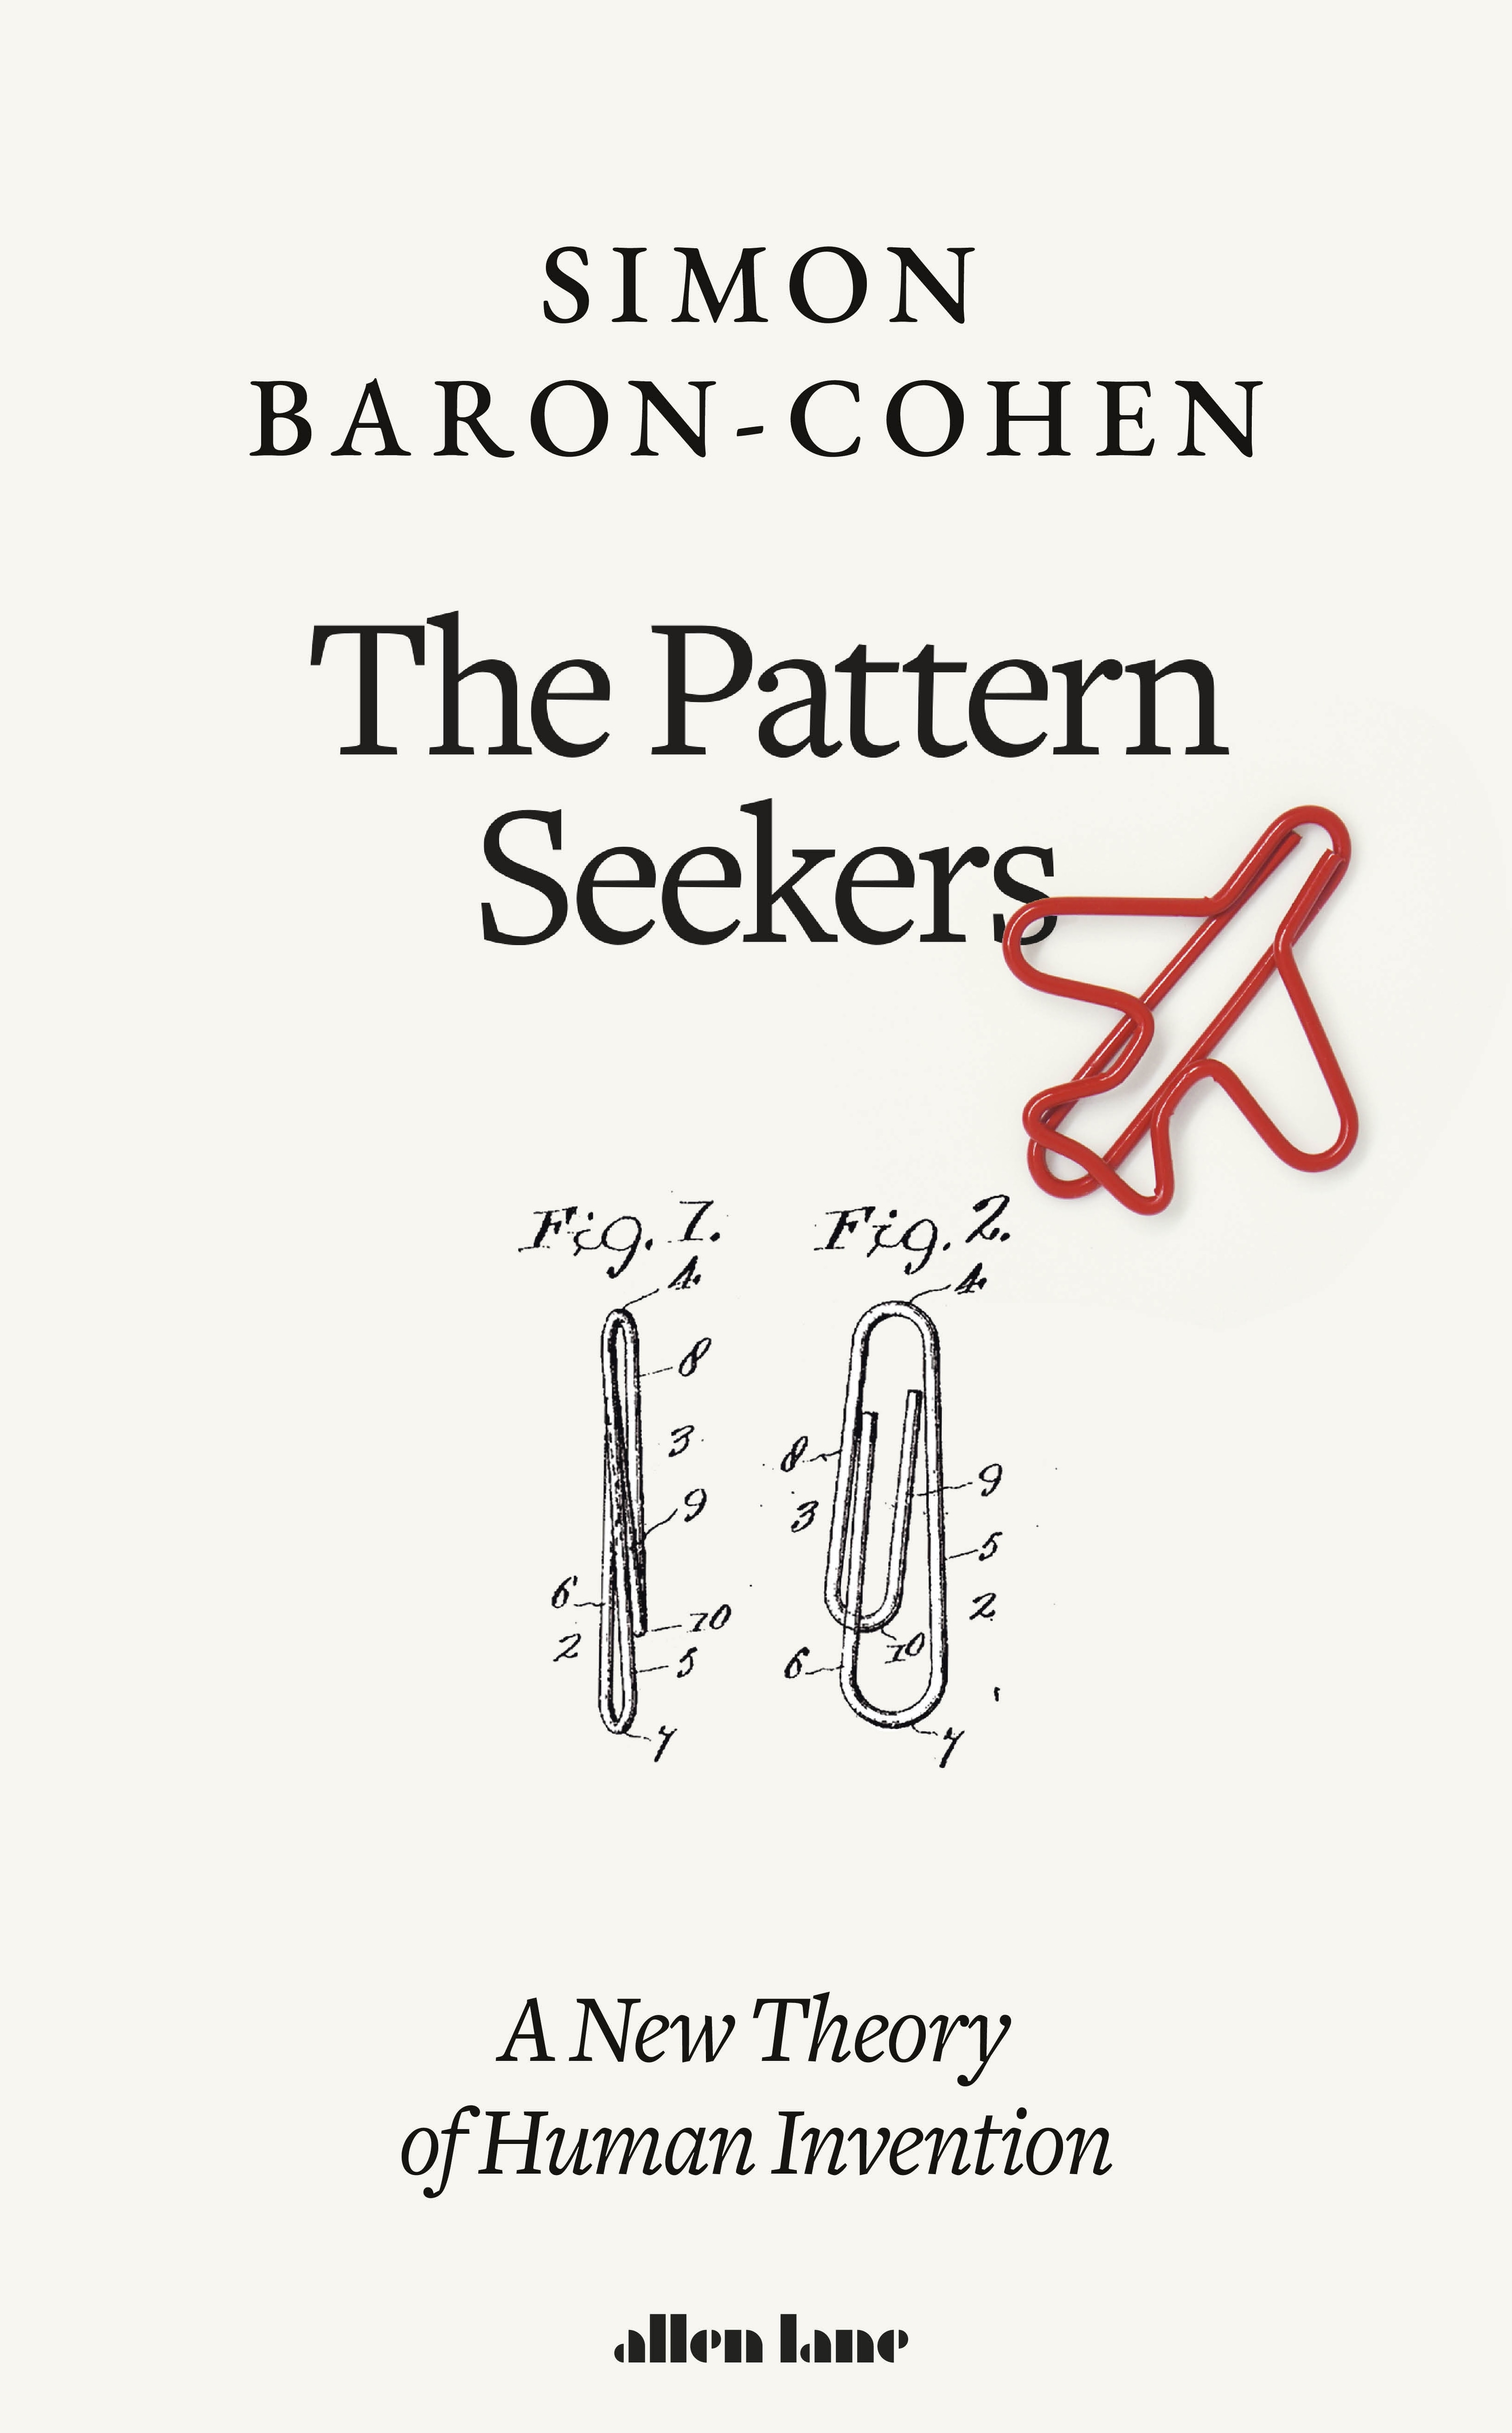 Book “The Pattern Seekers” by Simon Baron-Cohen — November 10, 2020